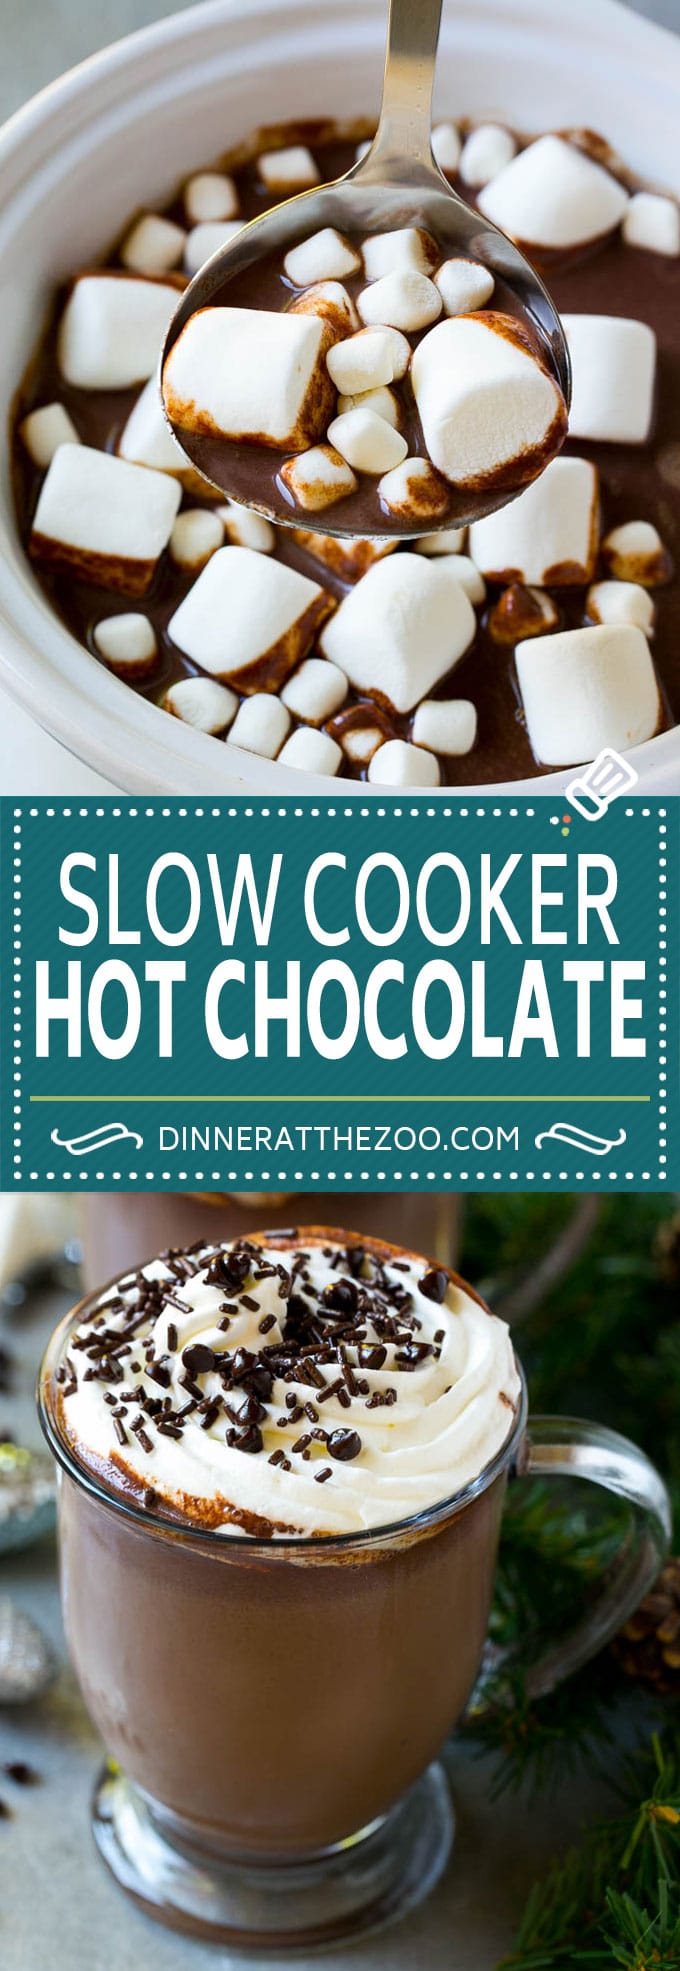 Slow Cooker Hot Chocolate Recipe | Homemade Hot Chocolate | Slow Cooker Hot Cocoa | Crock Pot Hot Chocolate #drink #chocolate #cocoa #slowcooker #crockpot #dinneratthezoo